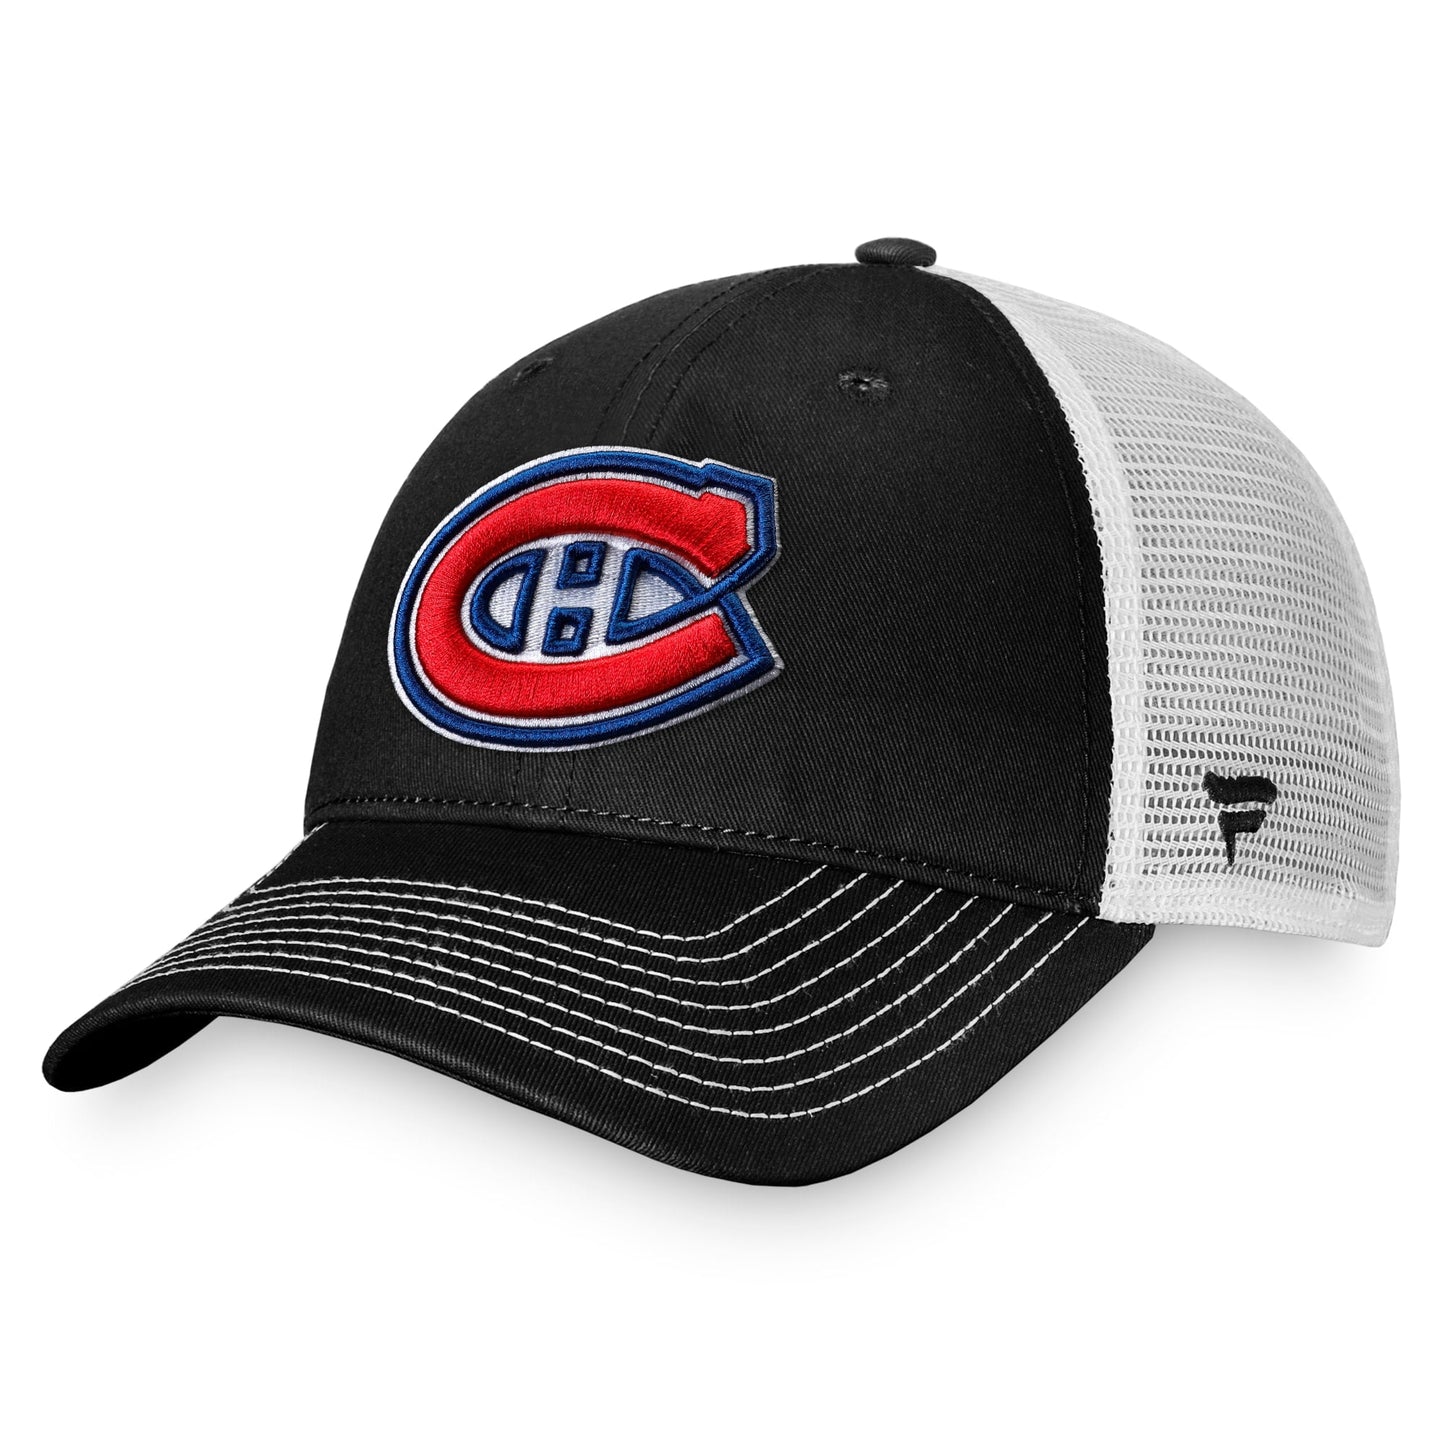 Men's Fanatics Branded Black/White Montreal Canadiens Slouch Core Primary Trucker Snapback Hat - OSFA